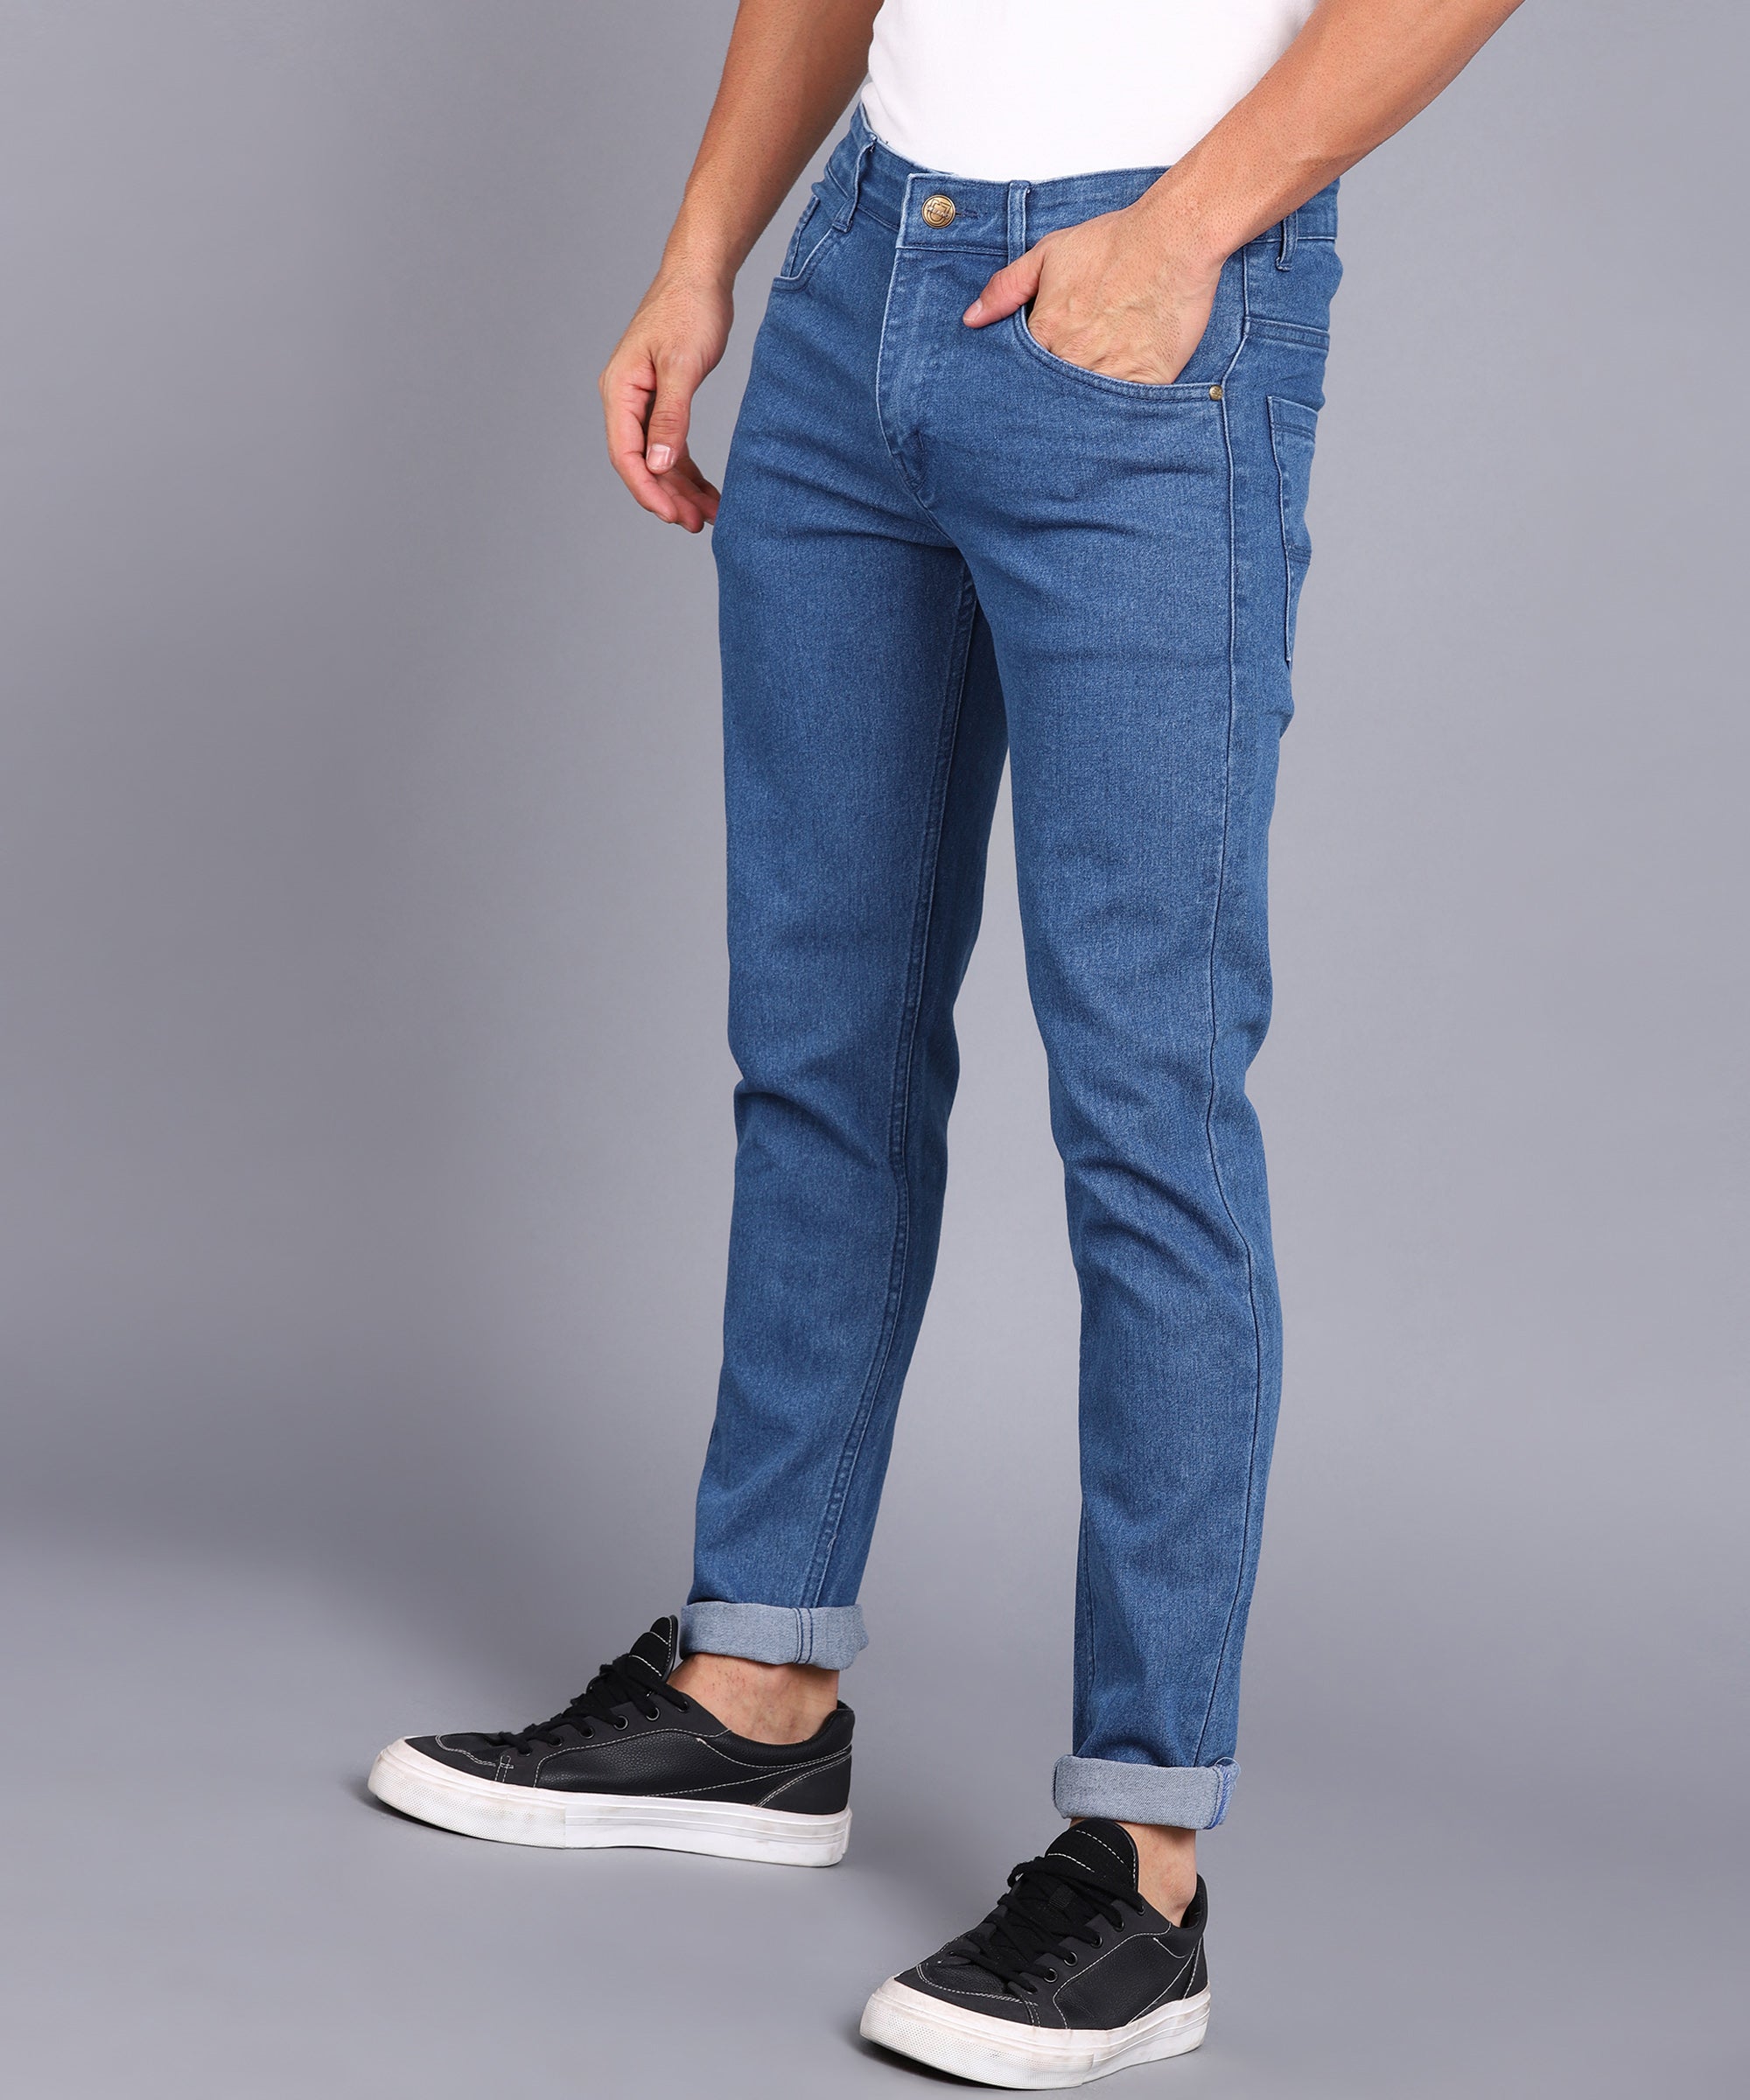 Men's Light Blue Slim Fit Stretchable Jeans